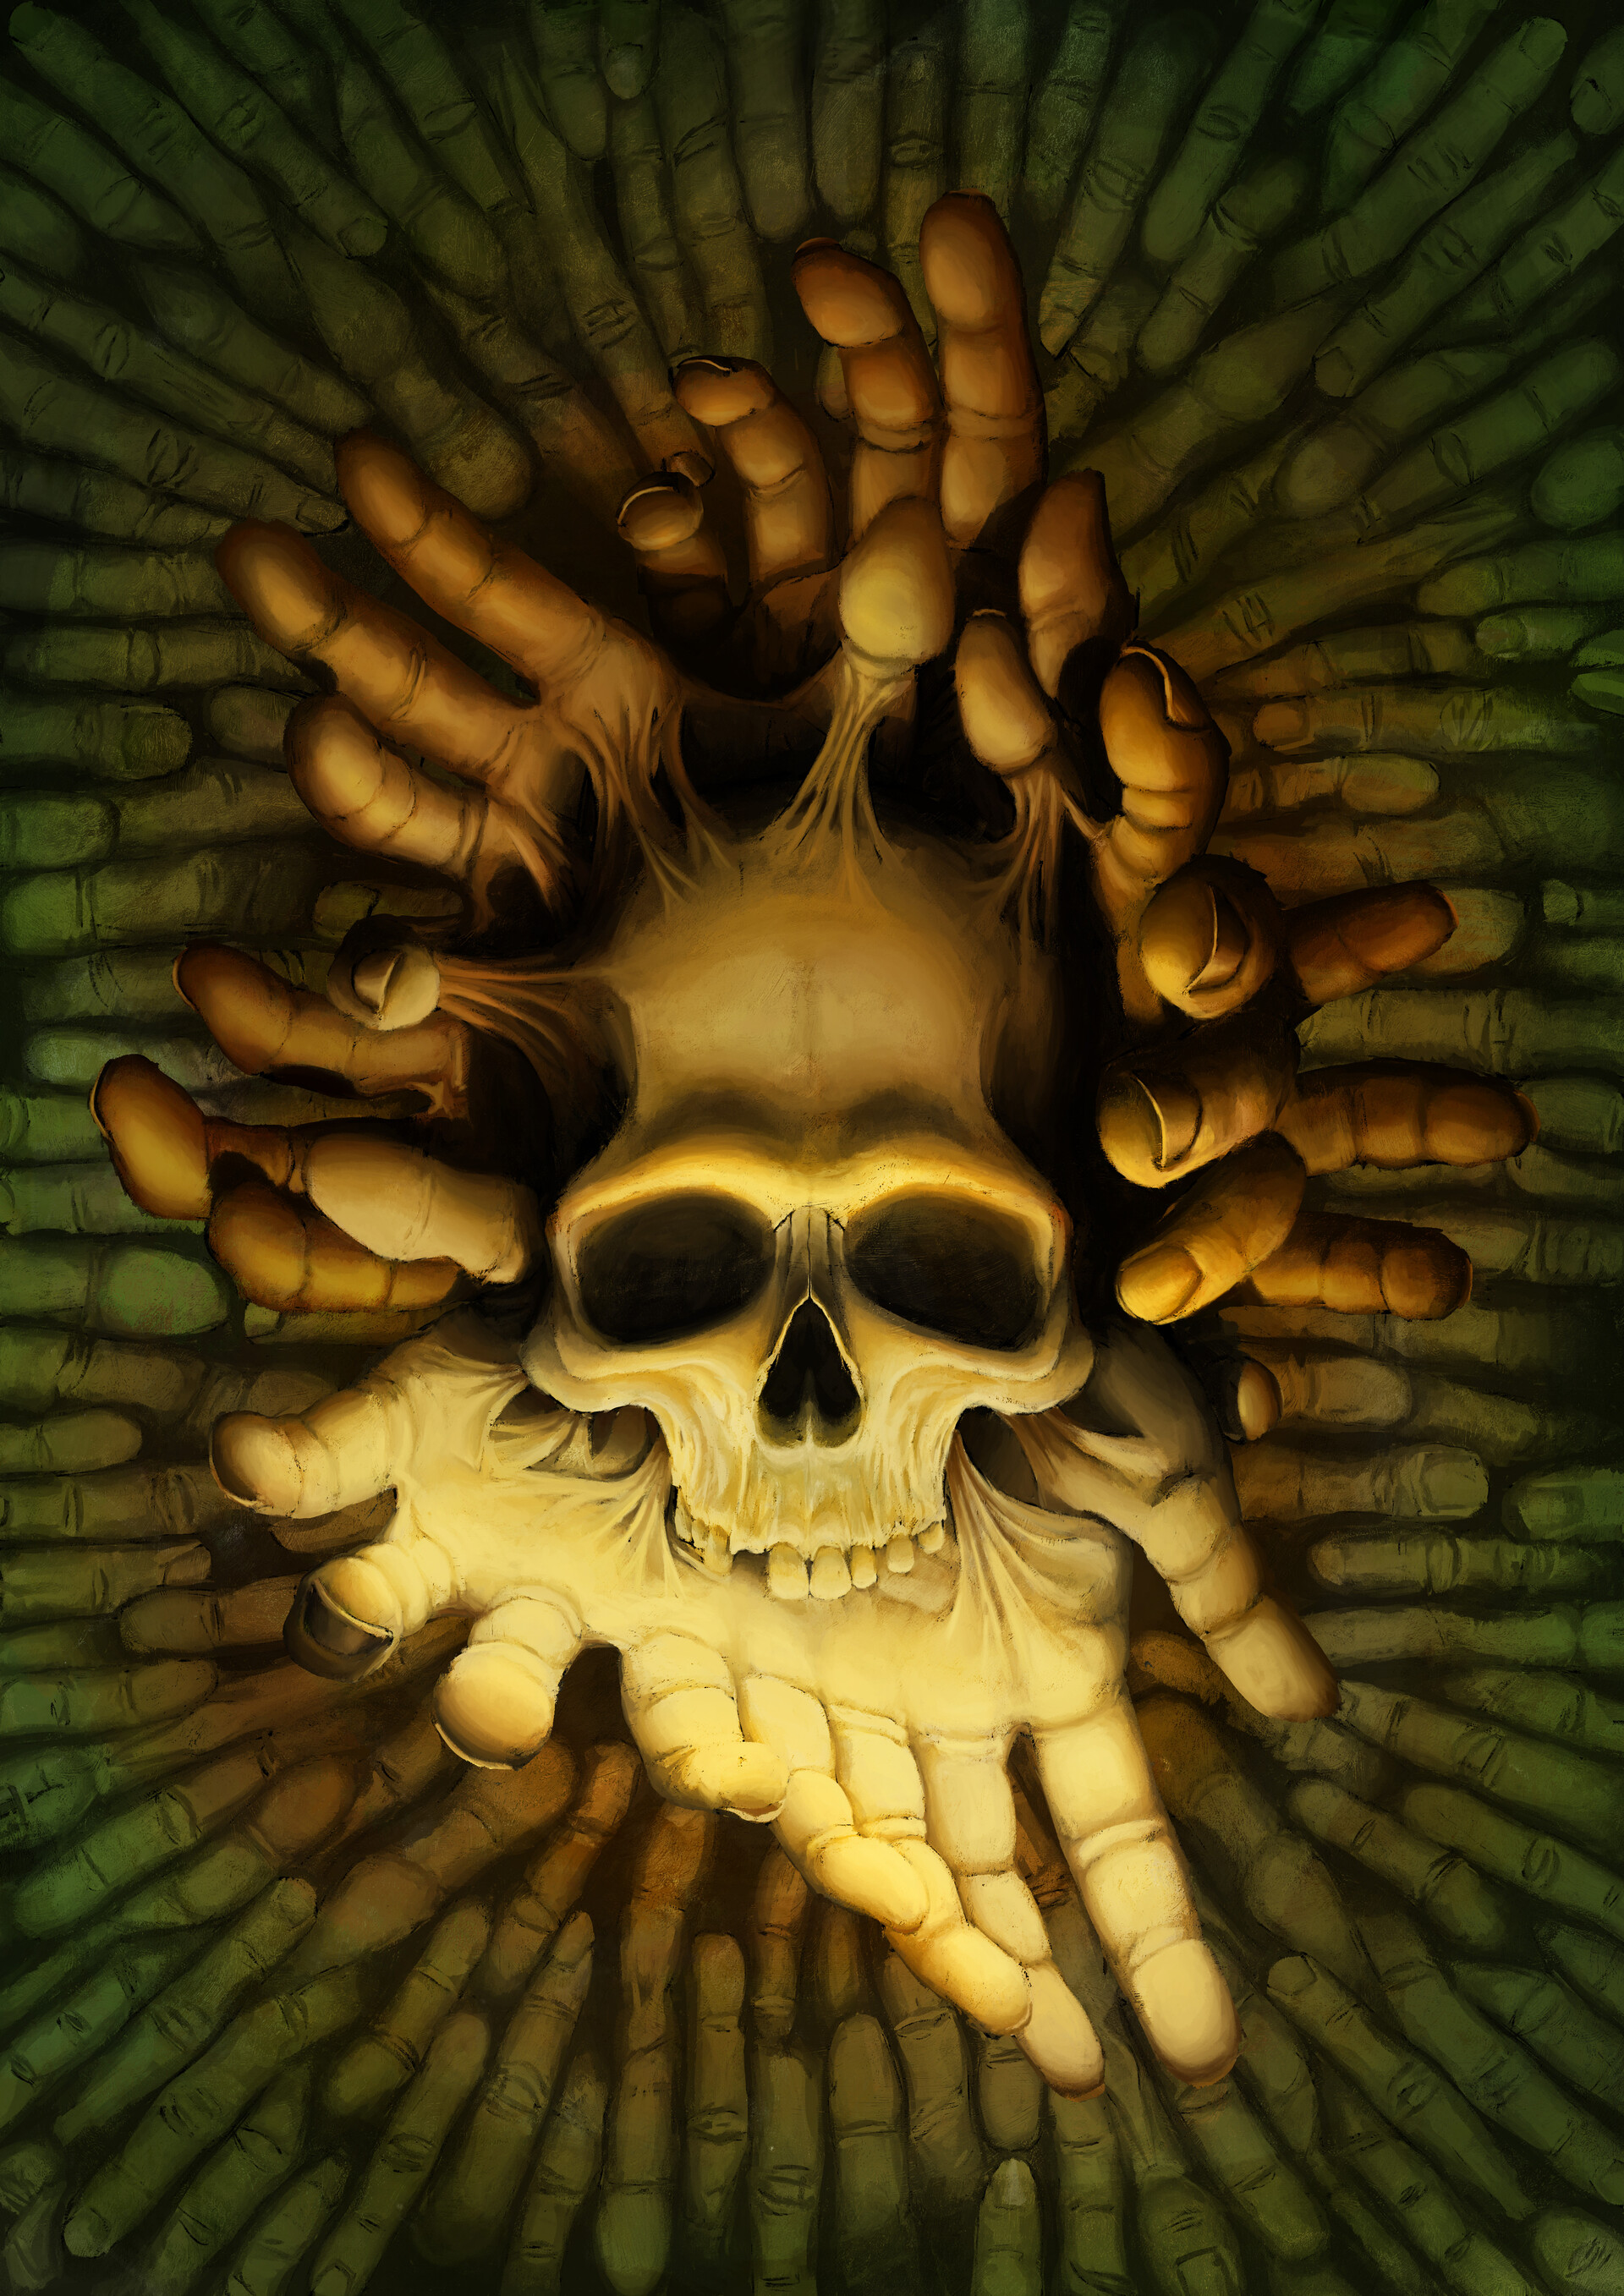 ArtStation - Illustration skull hand fingers